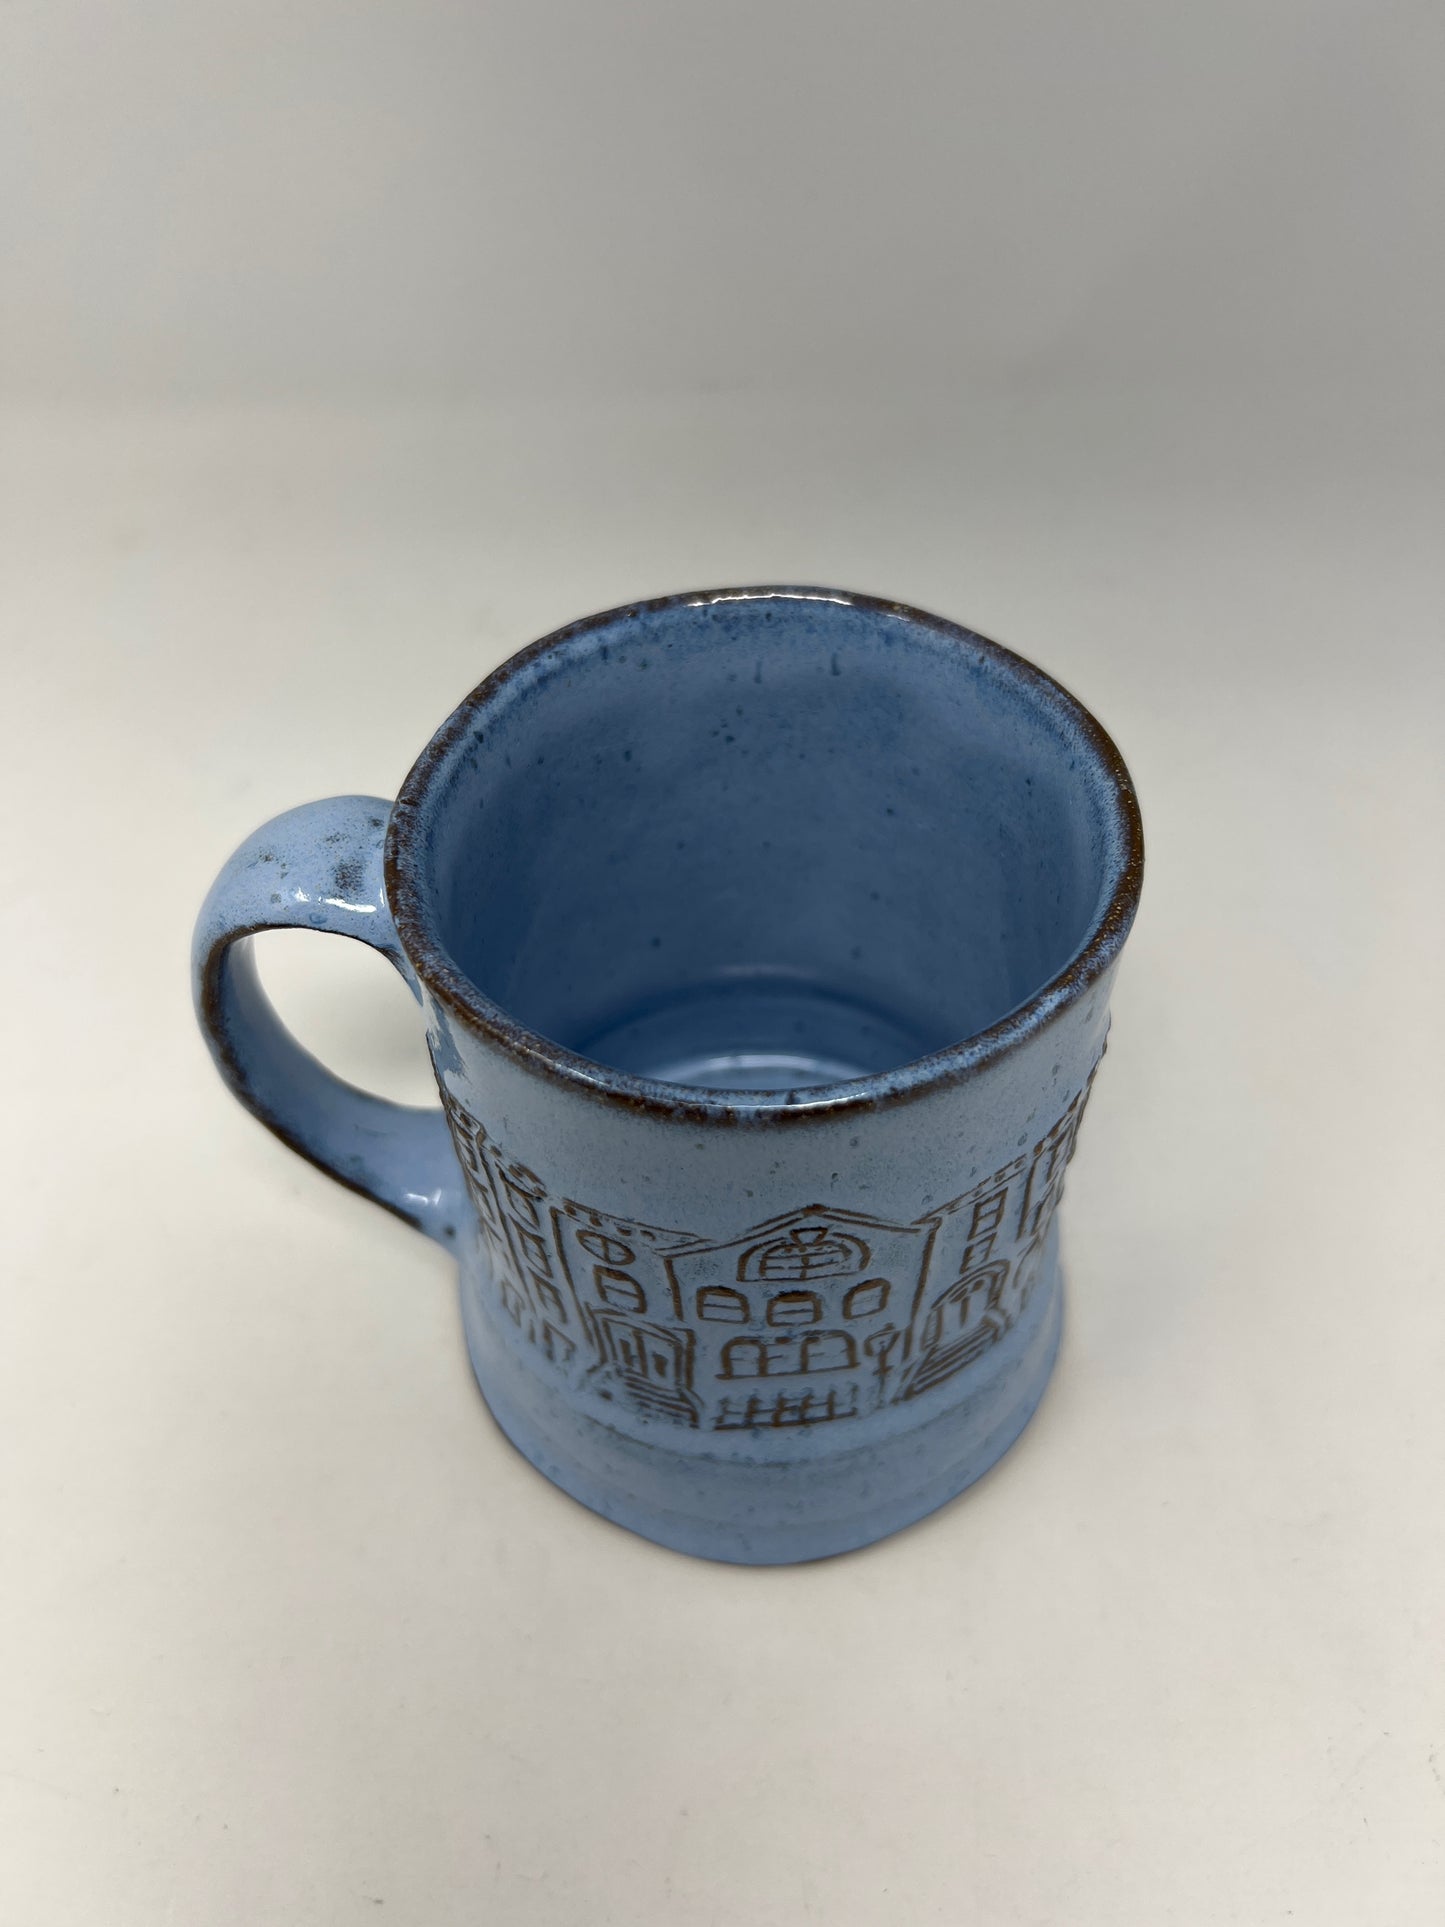 Brownstone Stein/Large Mug